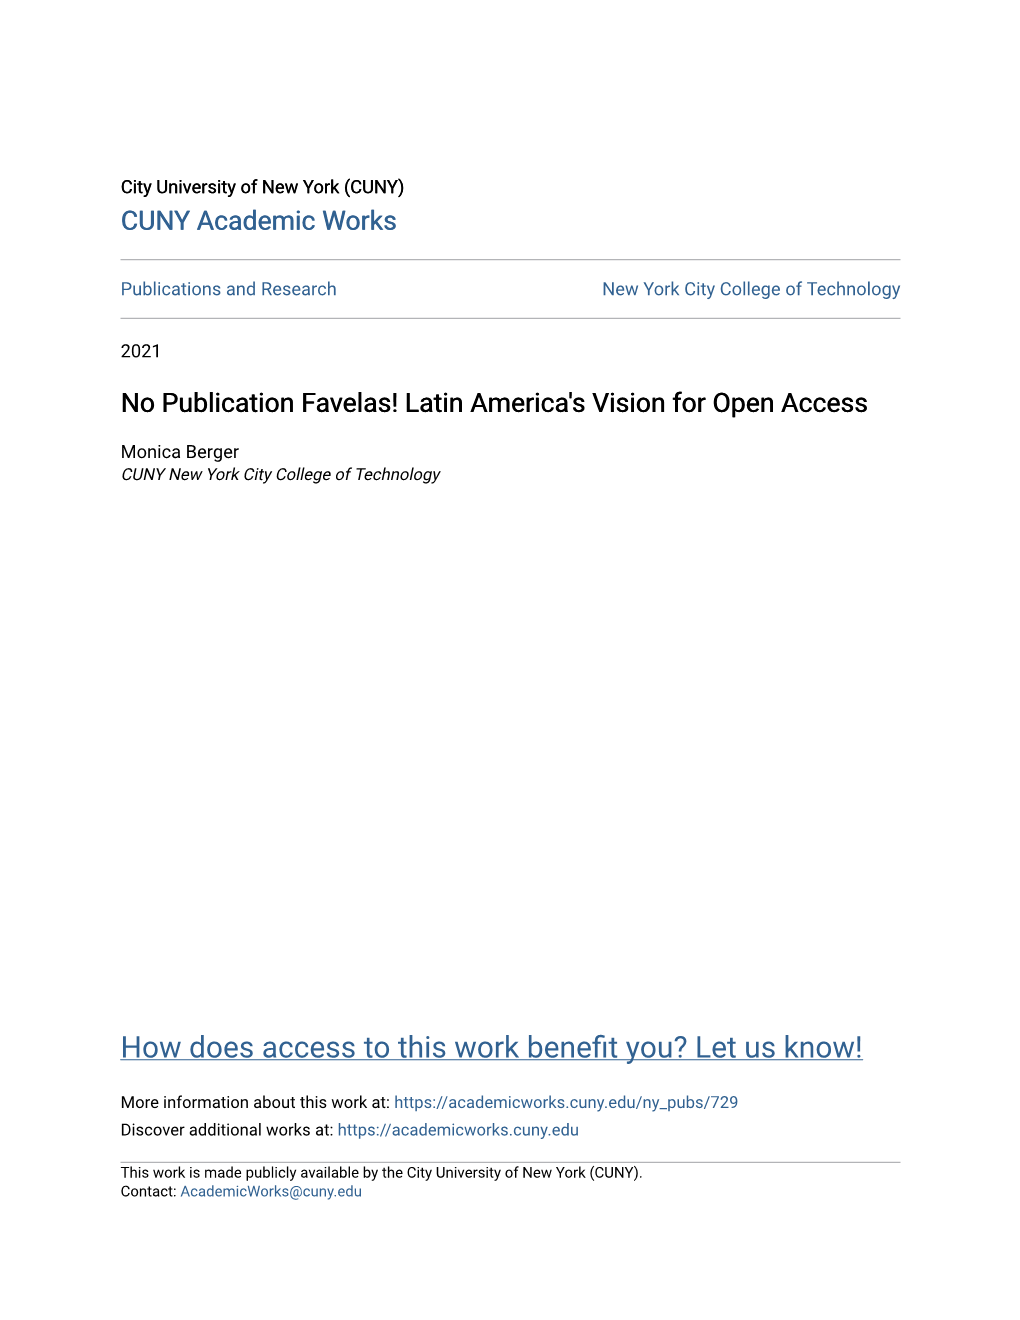 No Publication Favelas! Latin America's Vision for Open Access